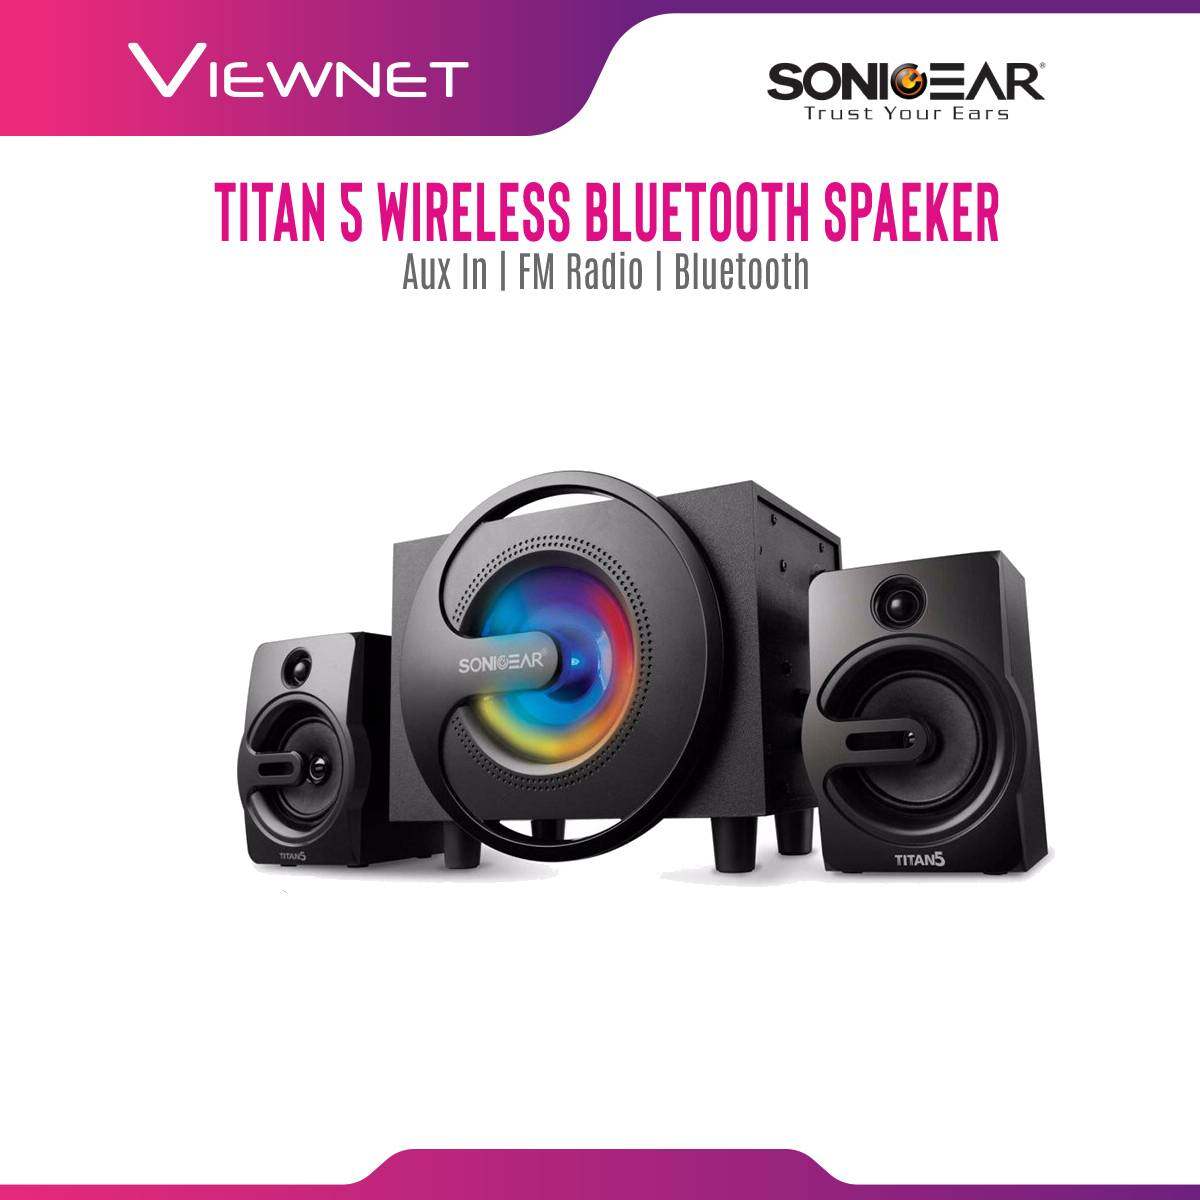 Sonic Gear Titan 5 BTMI Bluetooth Speaker 7 Colour Pulsating LED And FM Radio, USB Input, BT, Aux-In, FM Radio,USB Input